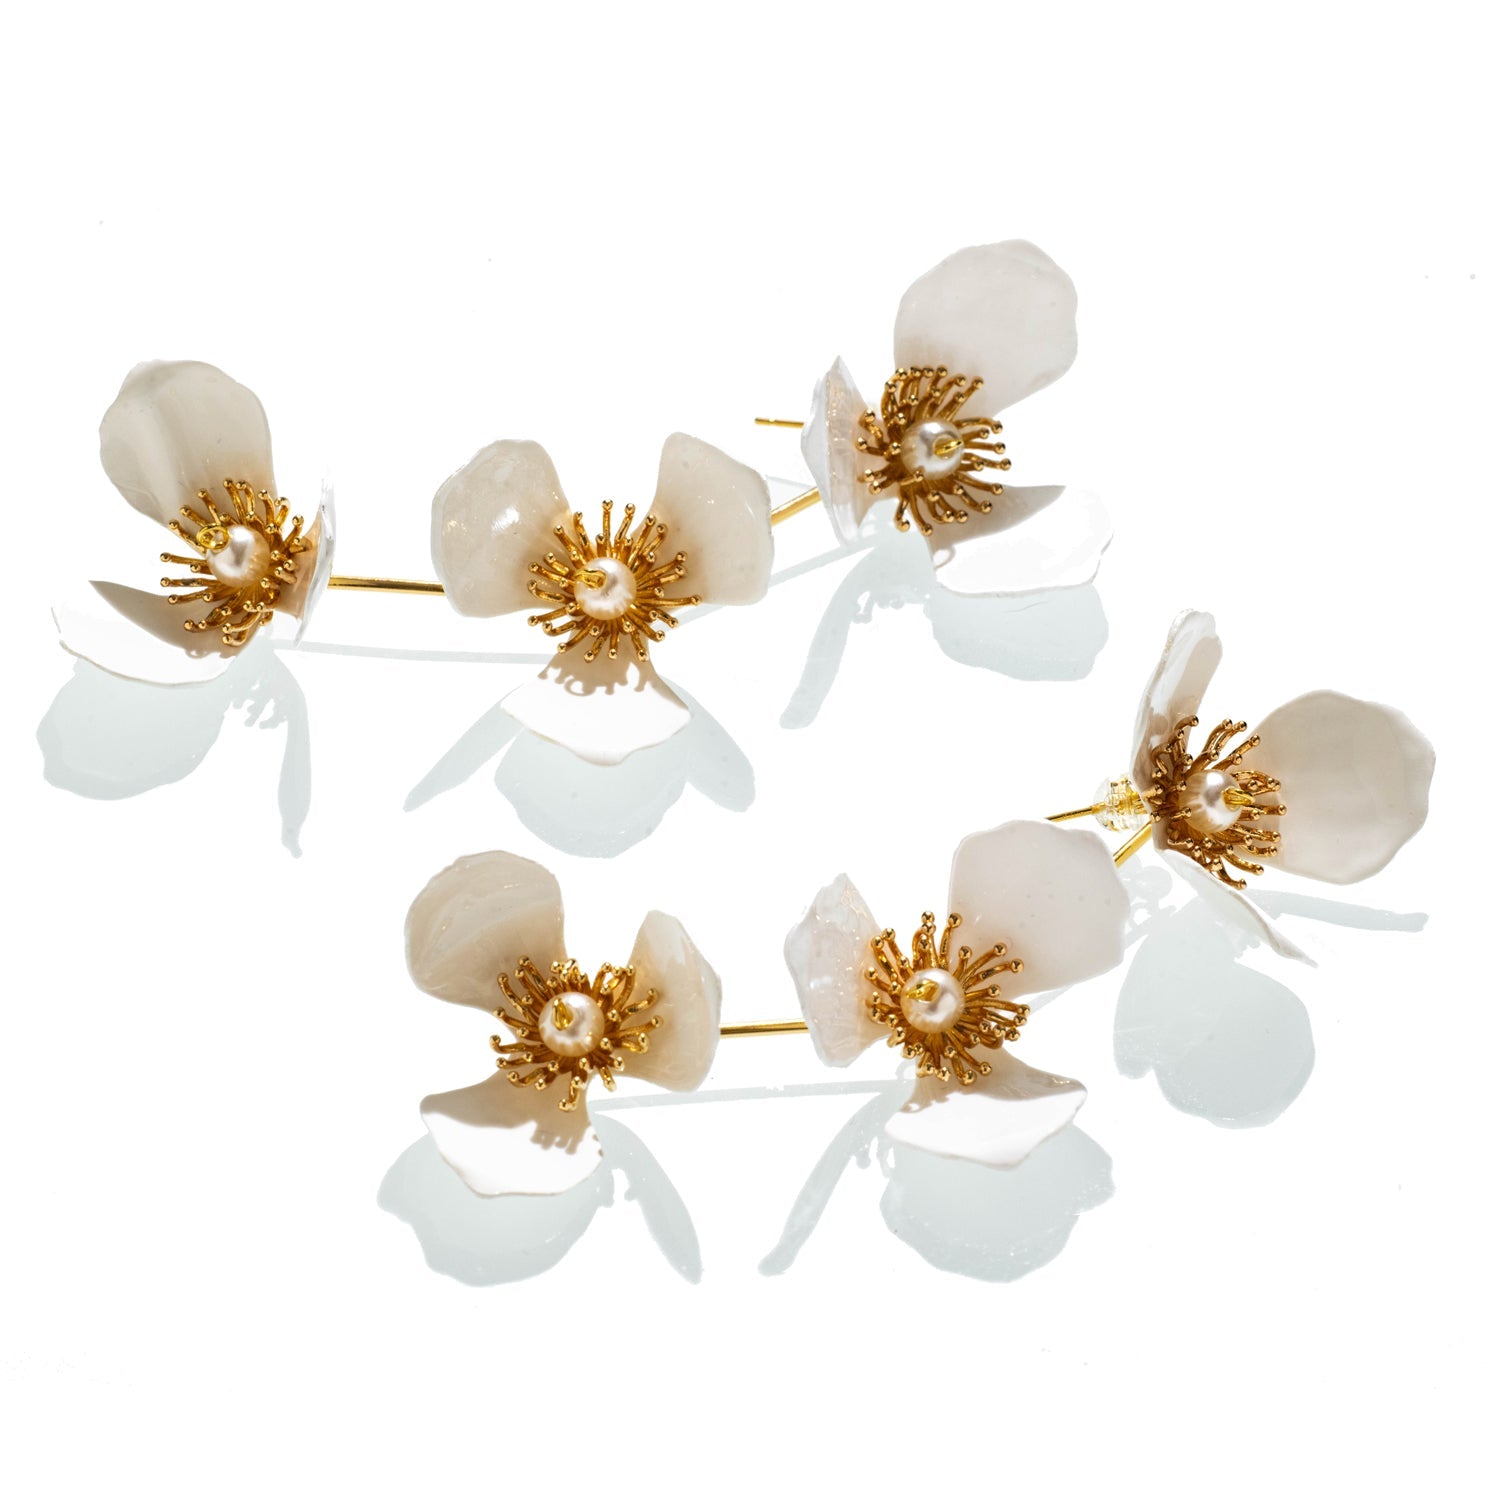 Dreifache Apfelblüten-Ohrstecker/Ohrstecker – Weiß - Triple Apple Flower Ear Pins/Stud Earrings - White-0